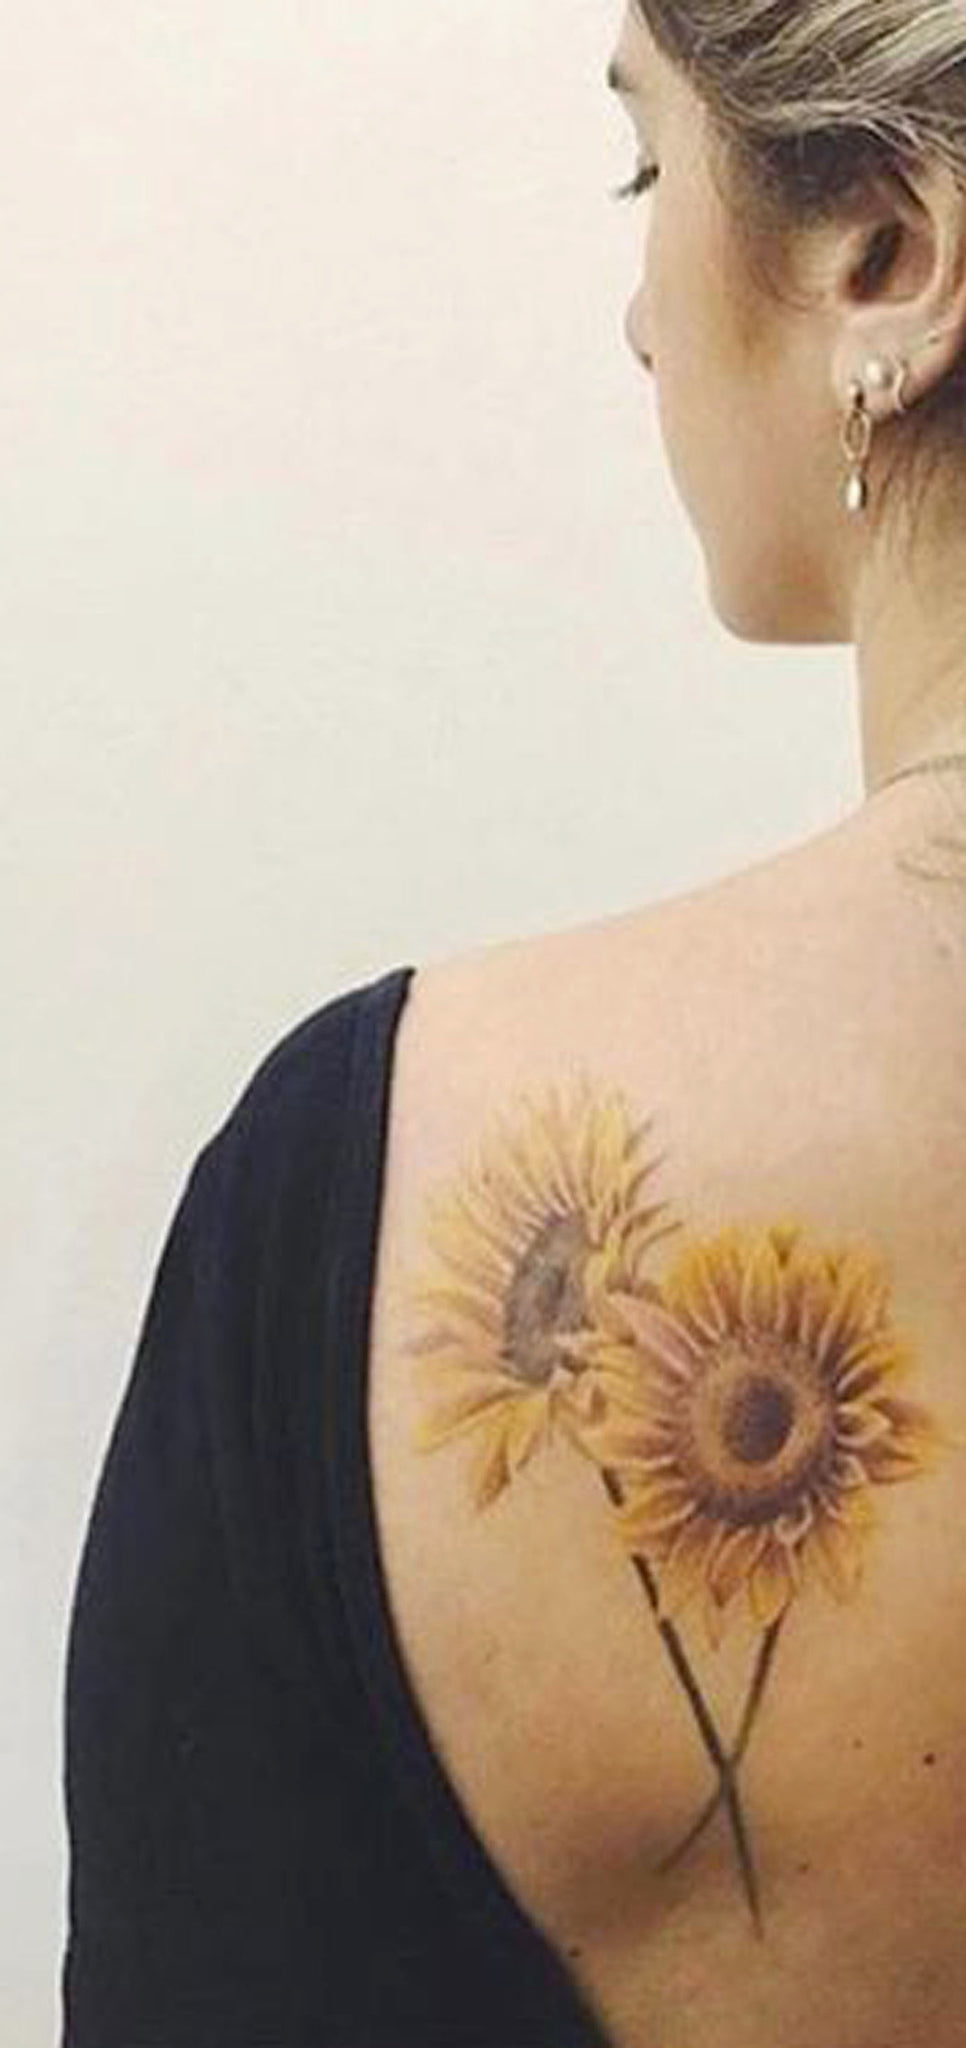 Beautiful Back Sunflower Tattoo Ideas for Women - Colorful Realistic Vintage Flower Shoulder Tat - www.MyBodiArt.com #tattoos